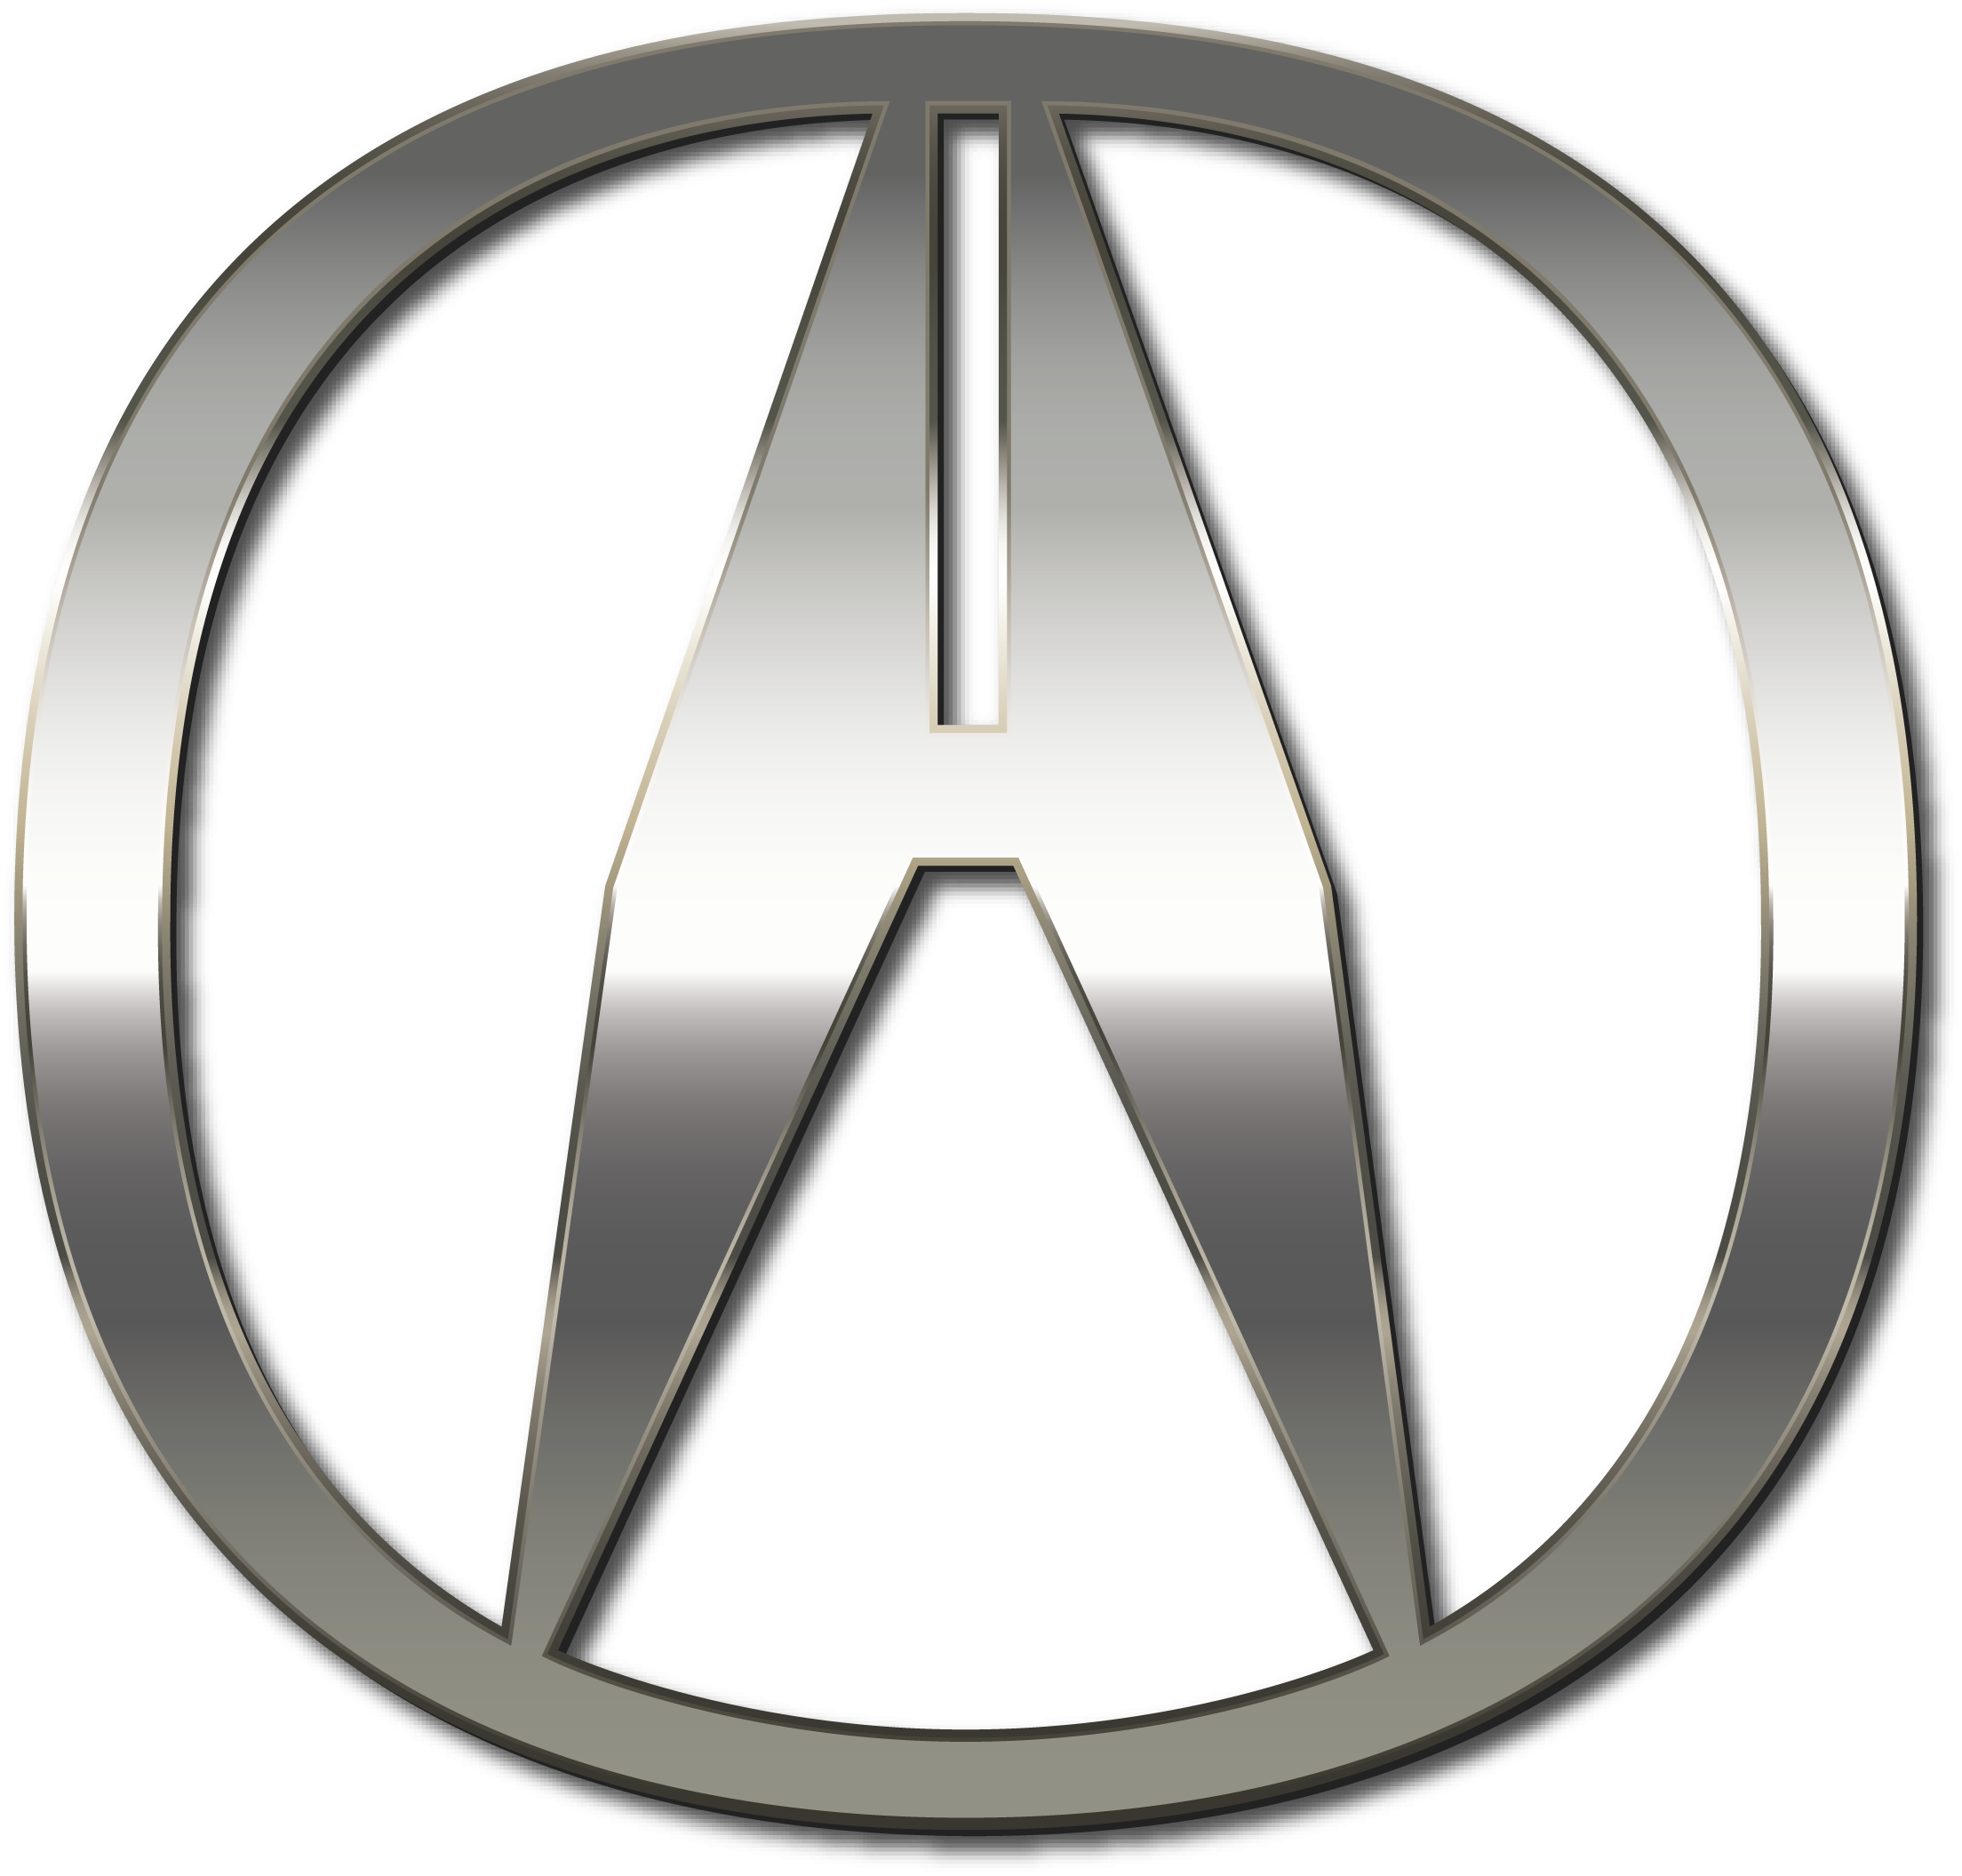 Марка машины на букву н. Acura марка. Знак Акура. Эмблемы иномарок. Логотипы марок машин.